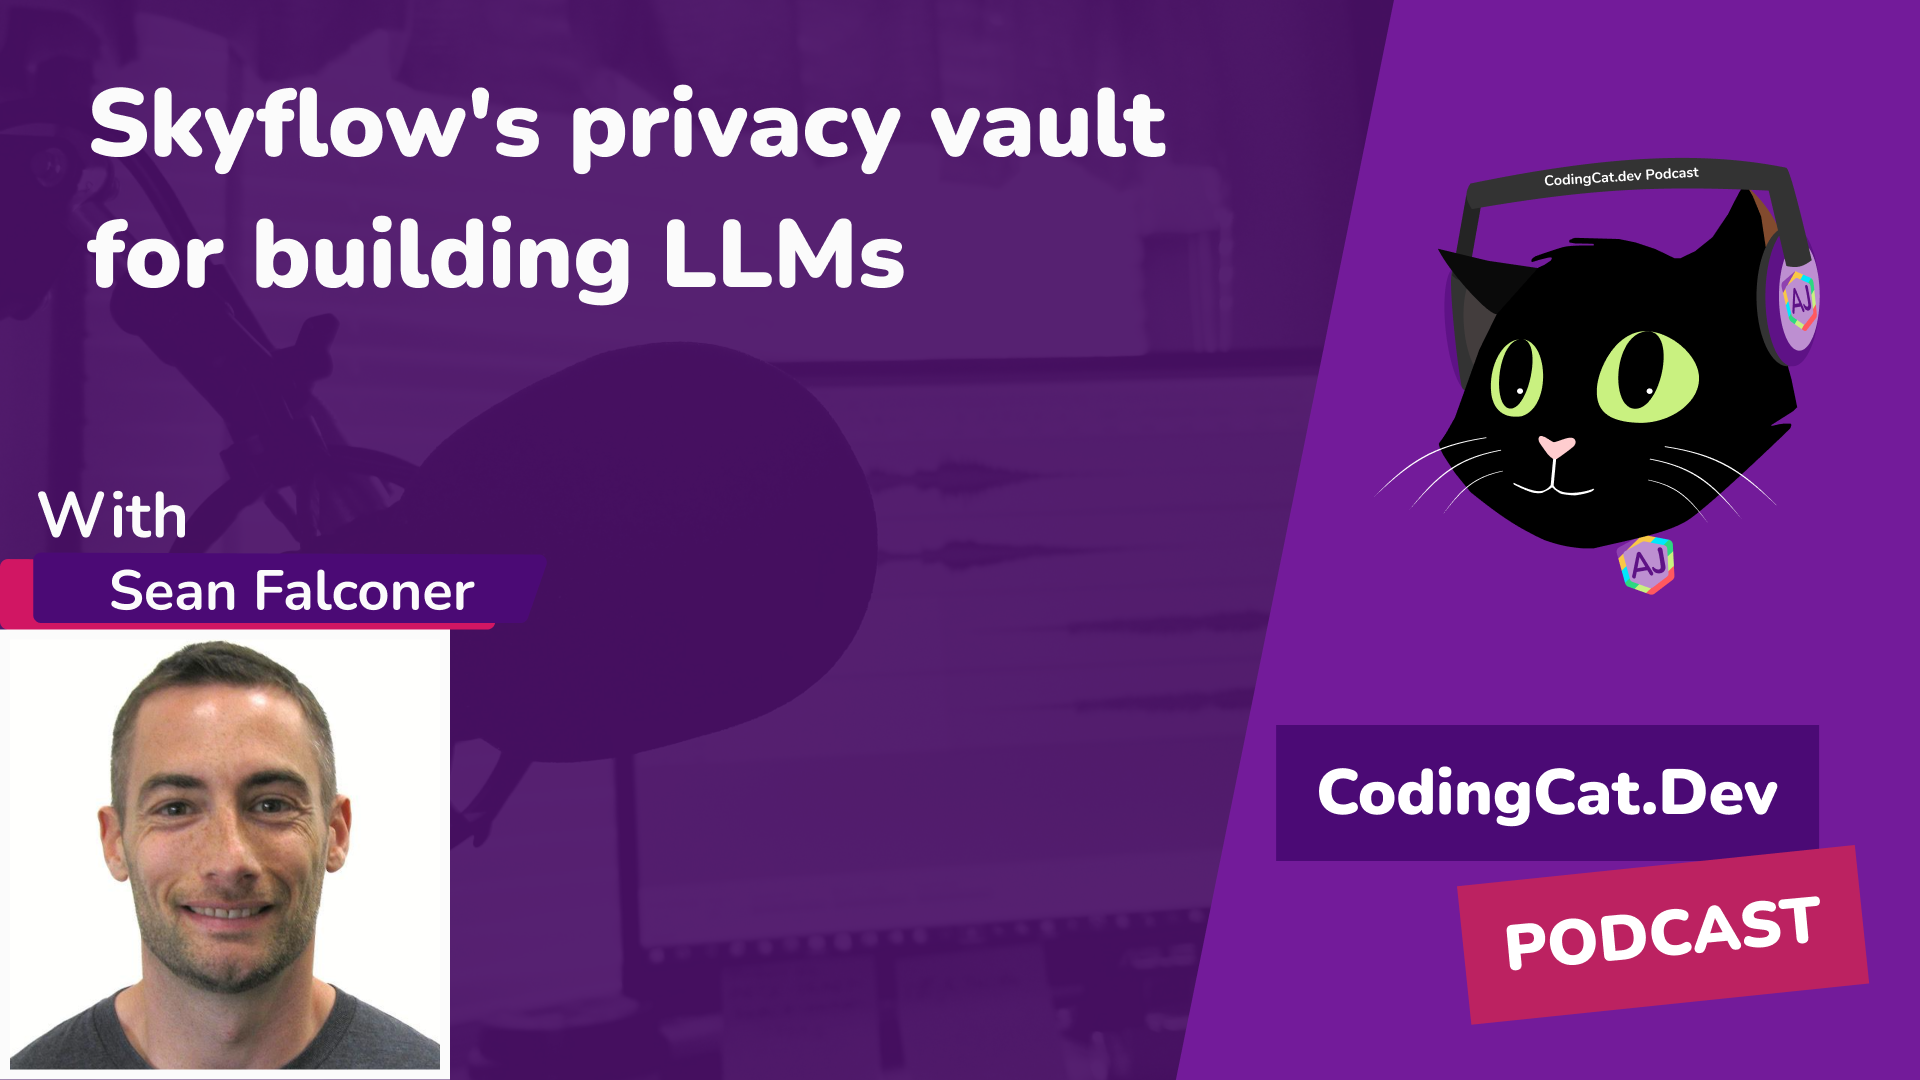 Skyflow's privacy vault for building LLMs